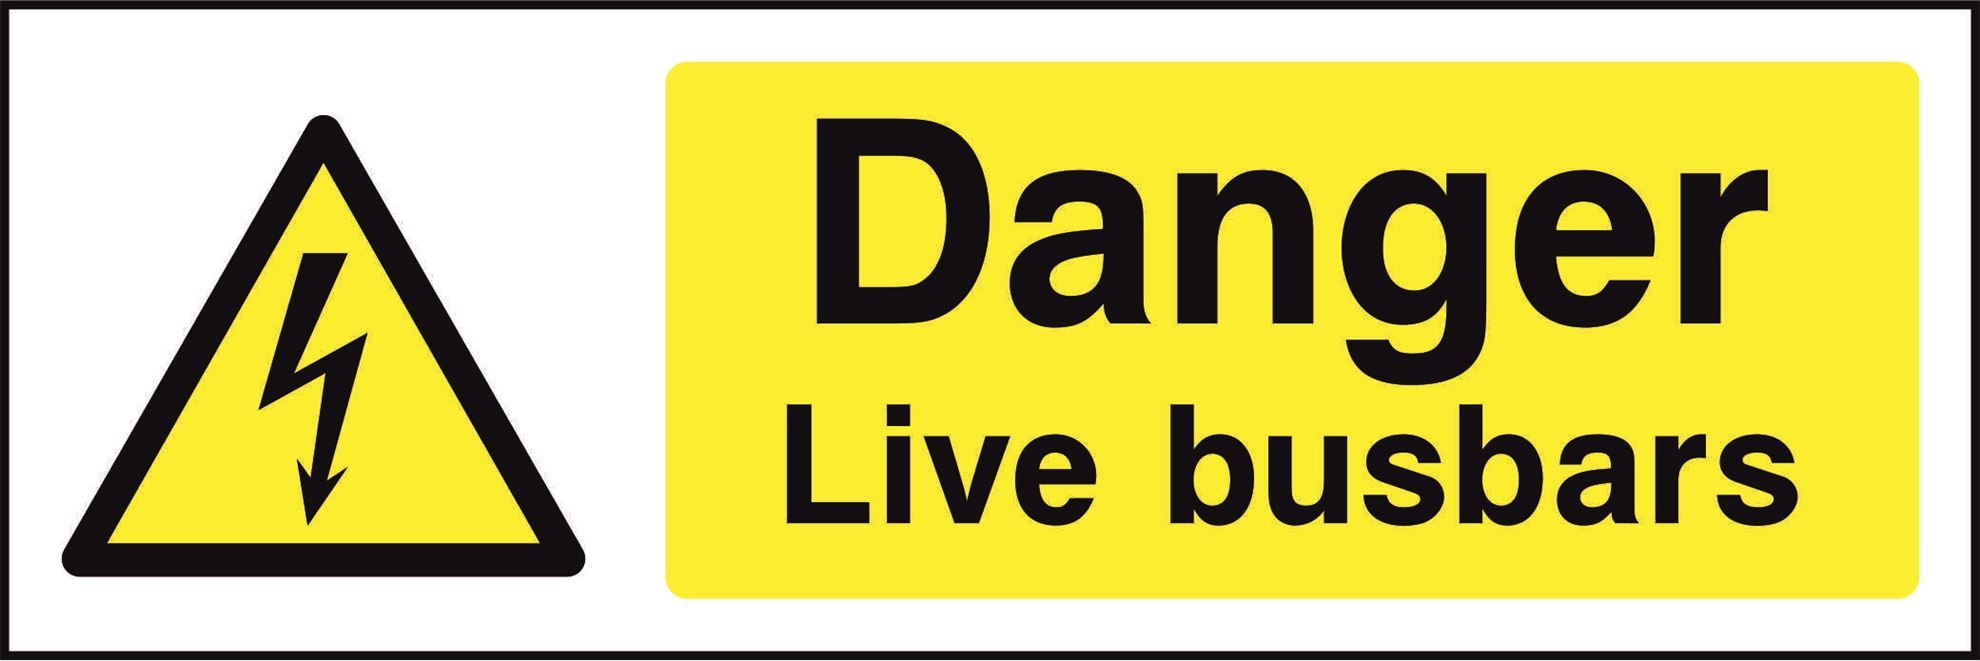 Danger Live busbars